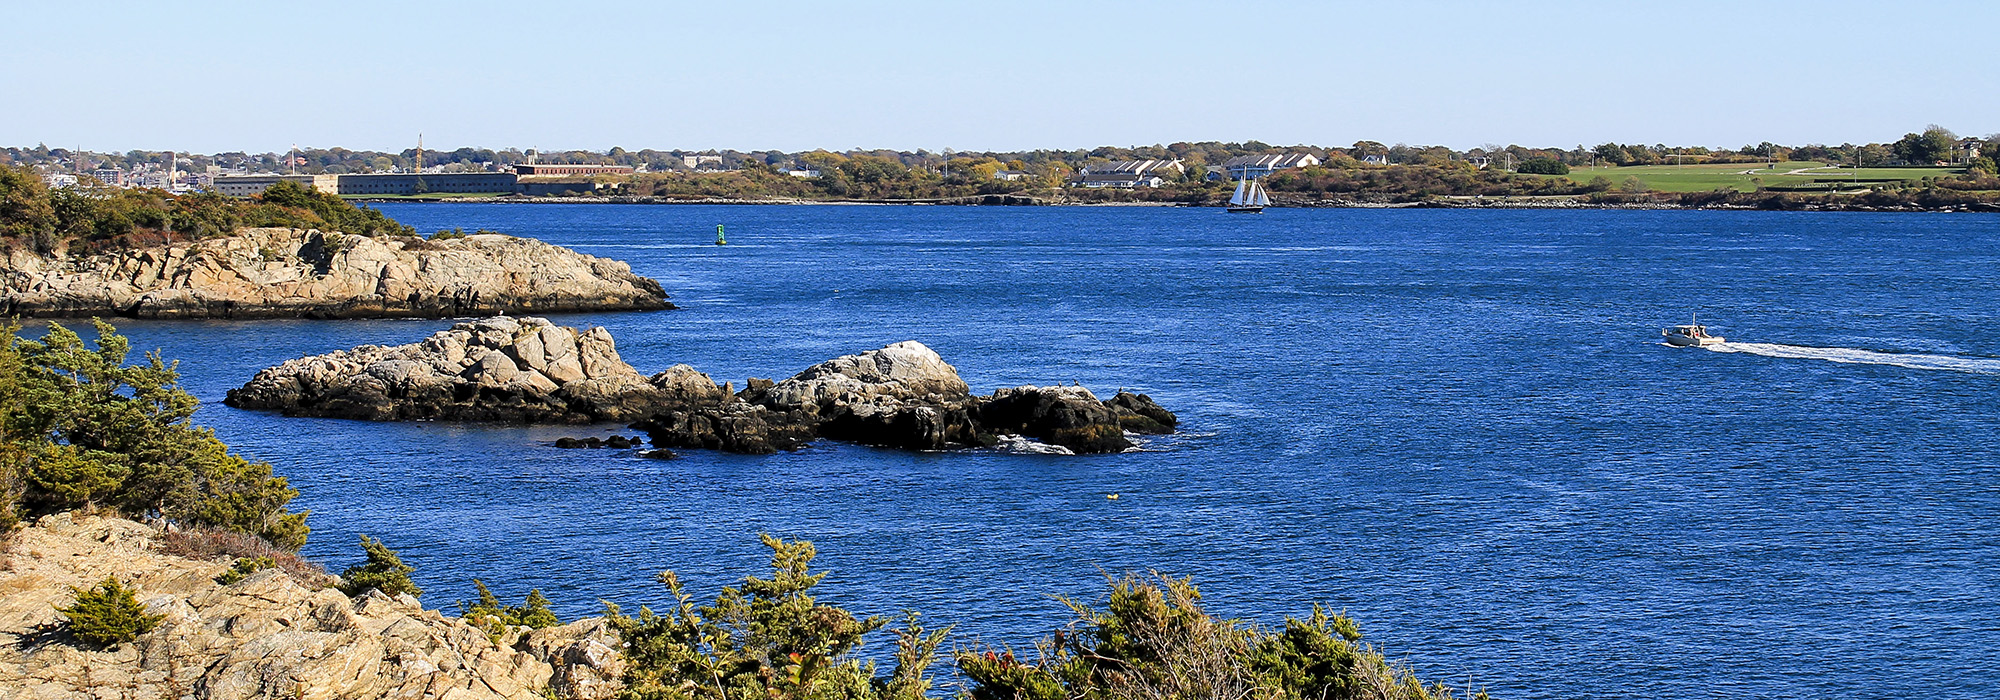 The Cultural Landscape Foundation, Rhode Island Landscape